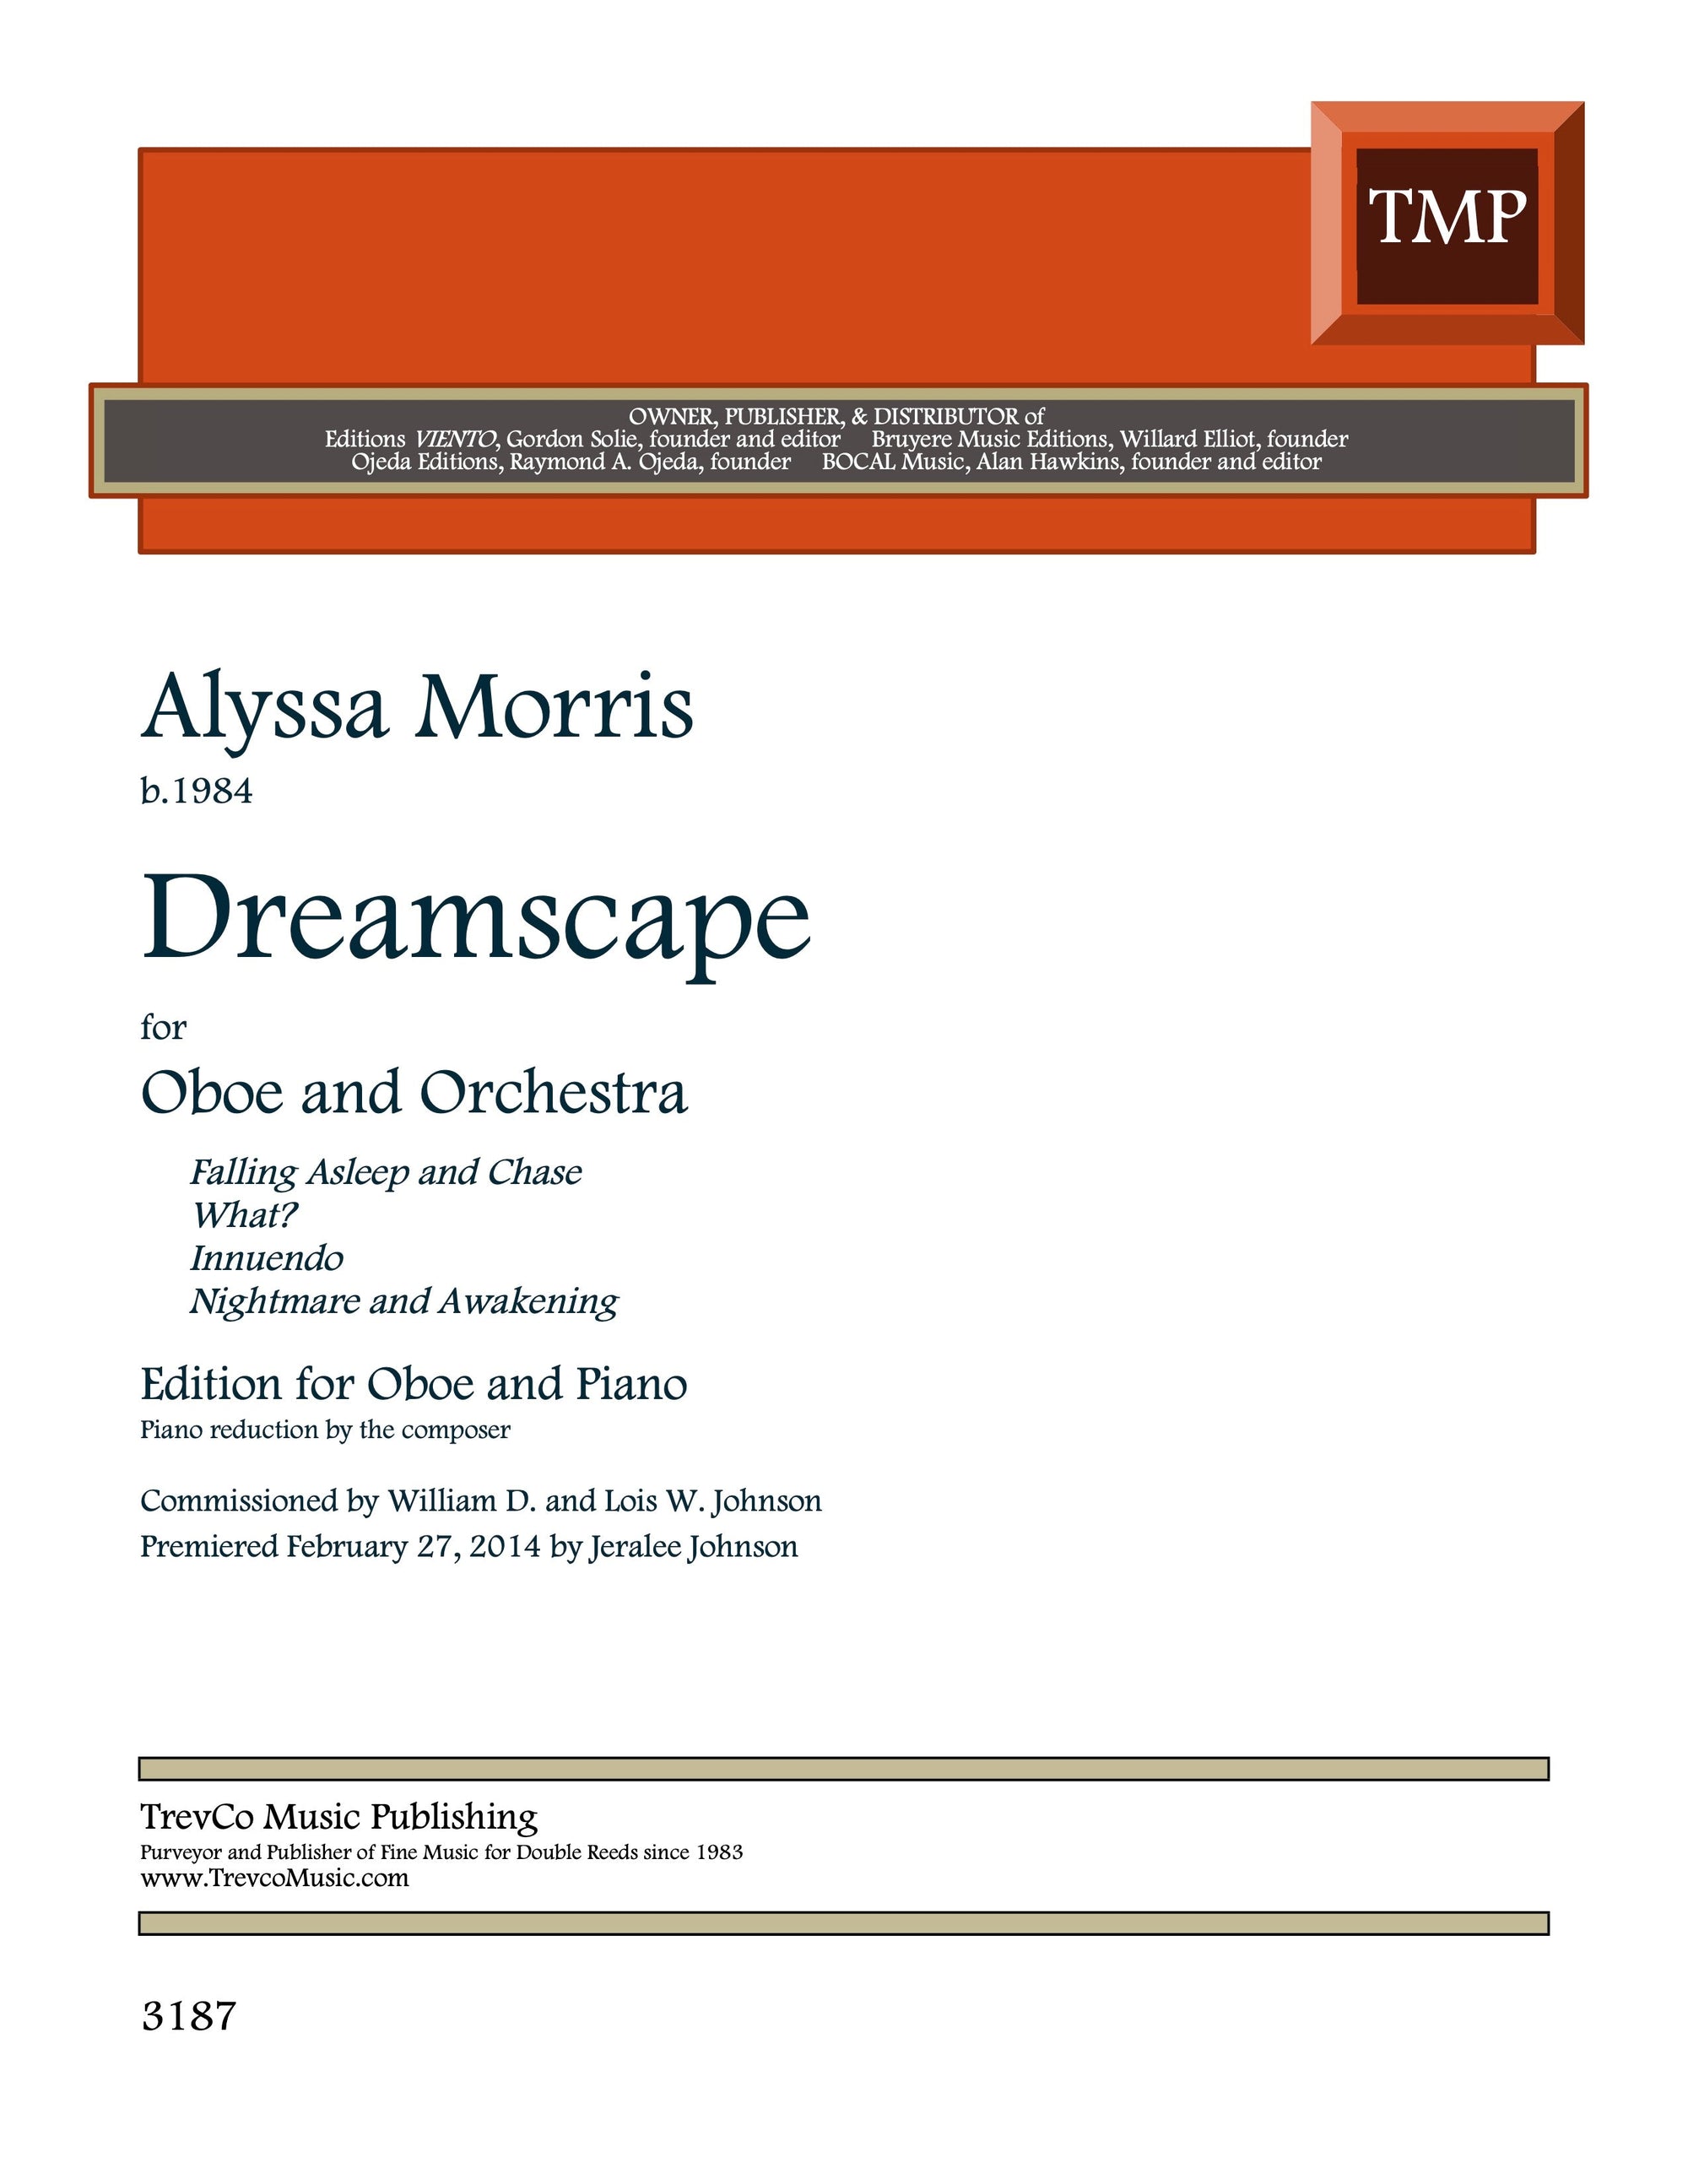 Morris: Dreamscape